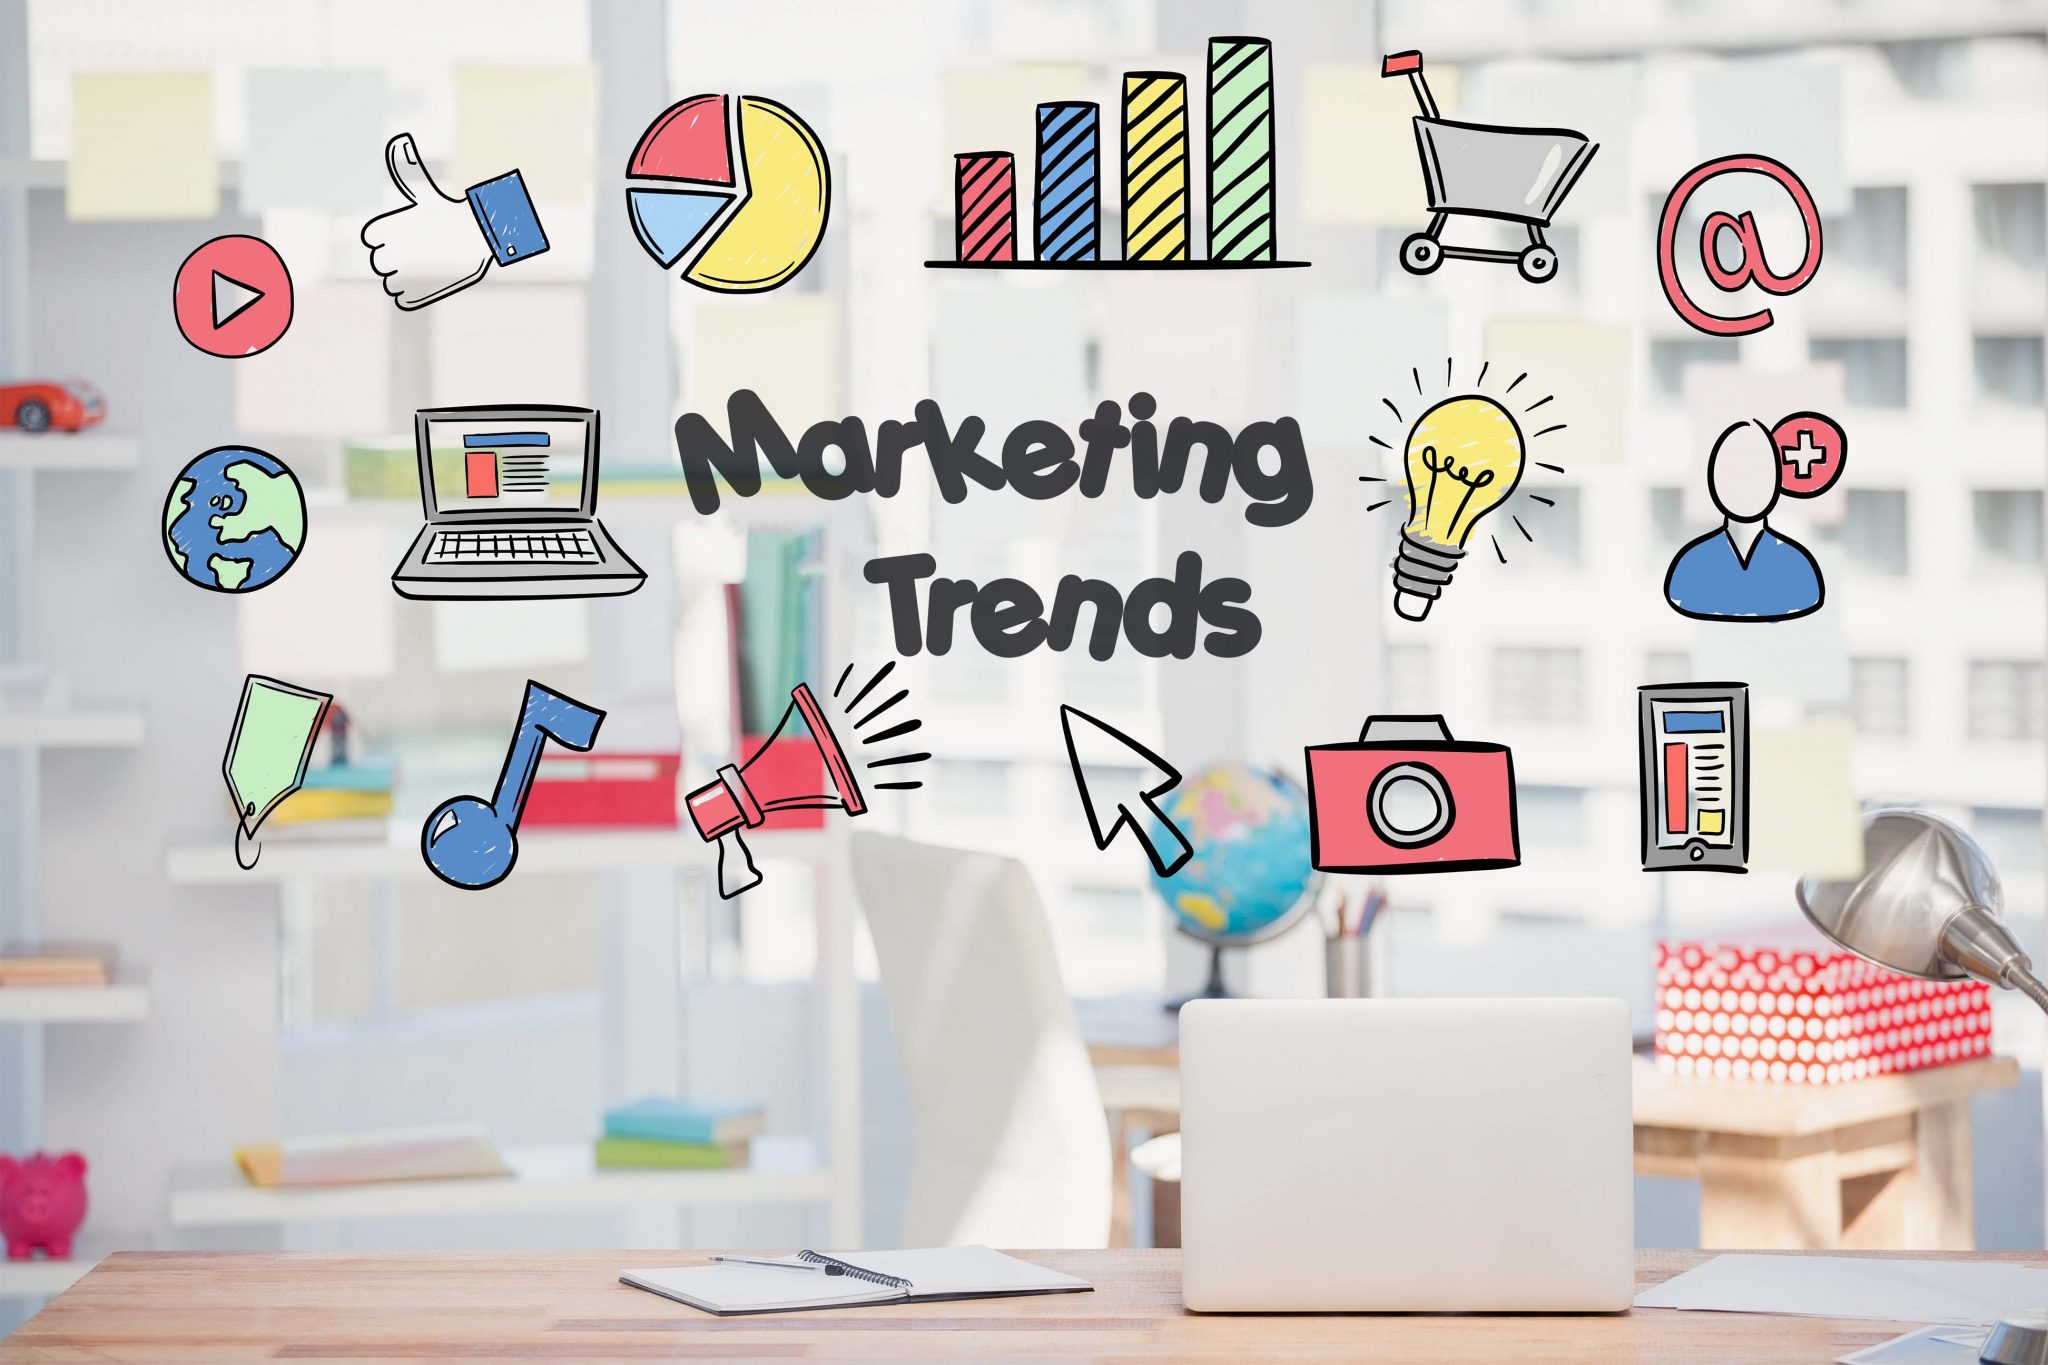 B2B Marketing Trends to watch in 2018